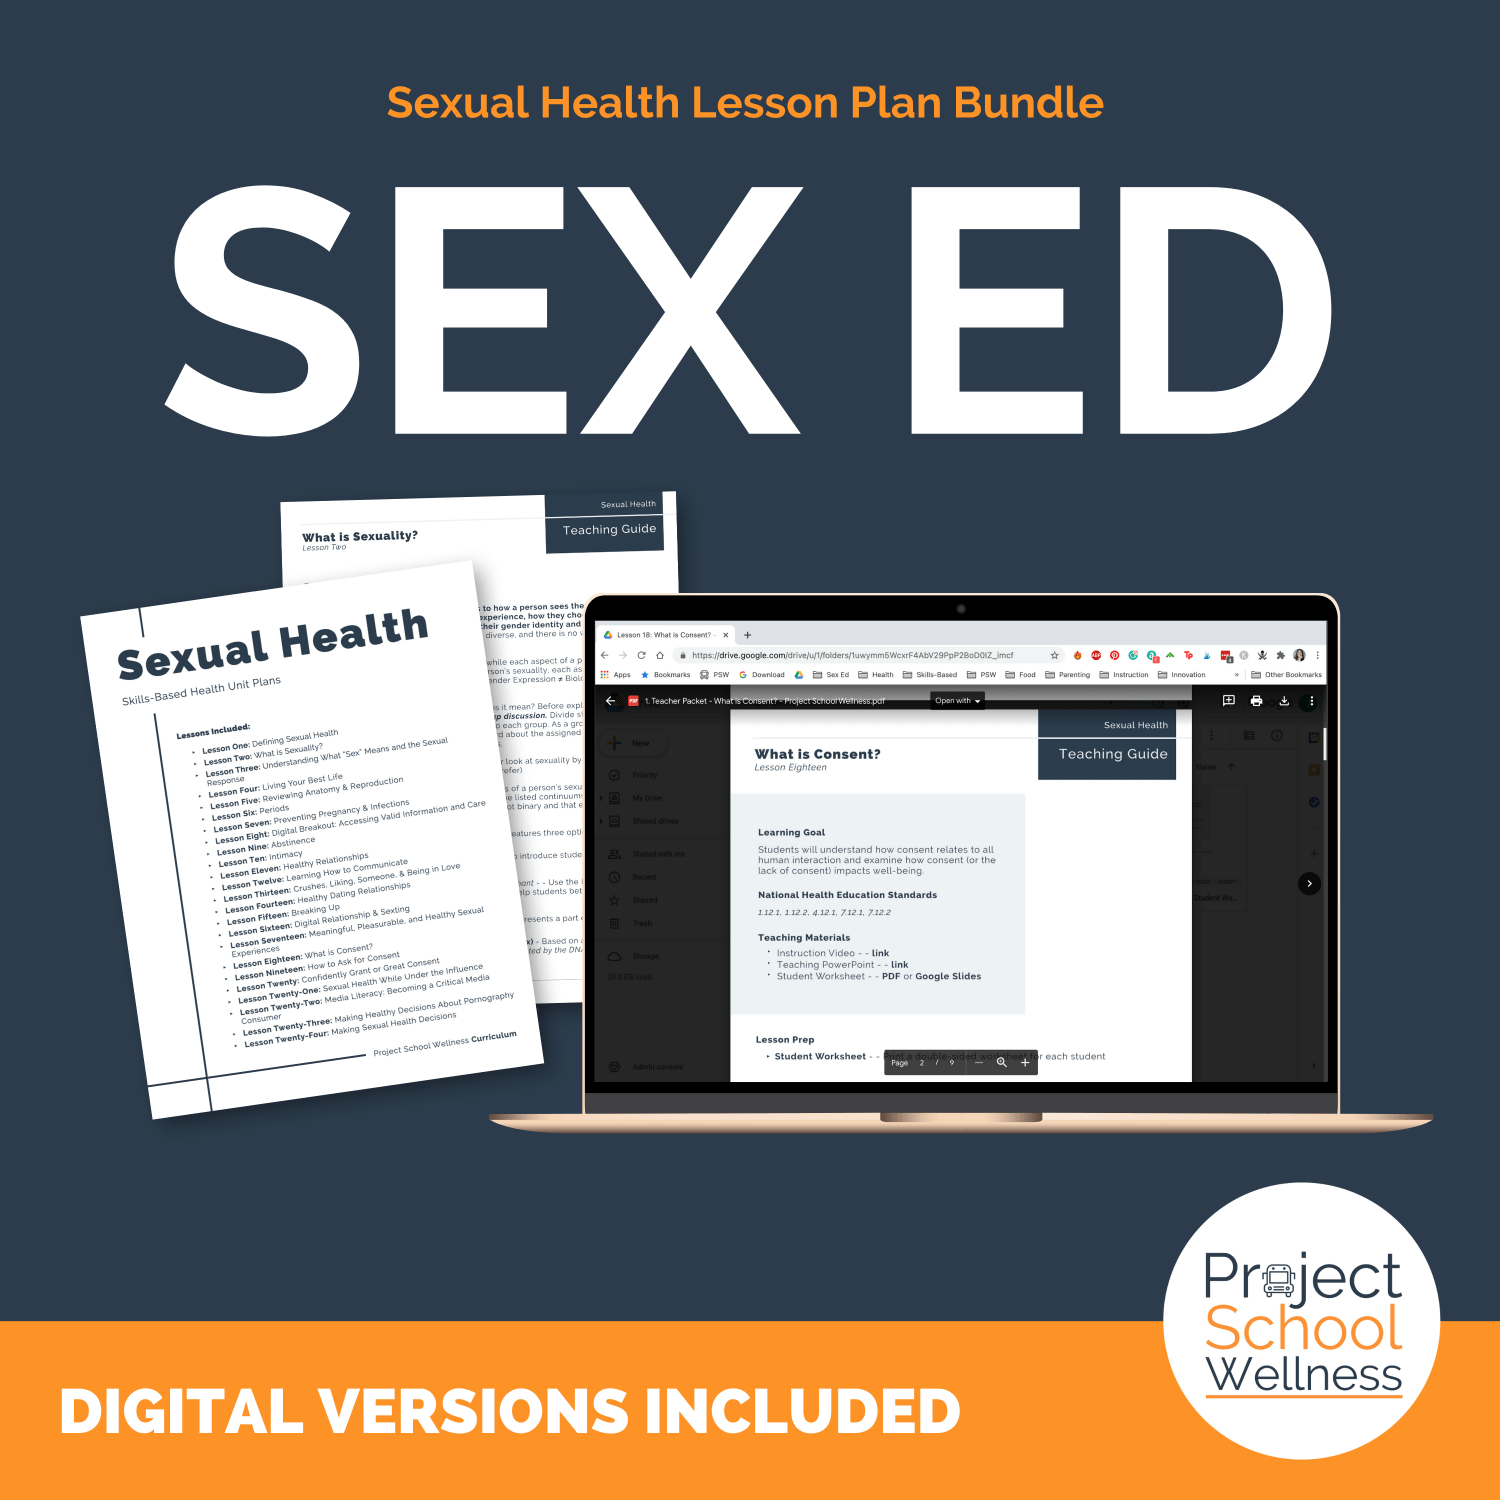 Project School Wellness Curriculum - A skills-based health education curriculum - Sex Ed